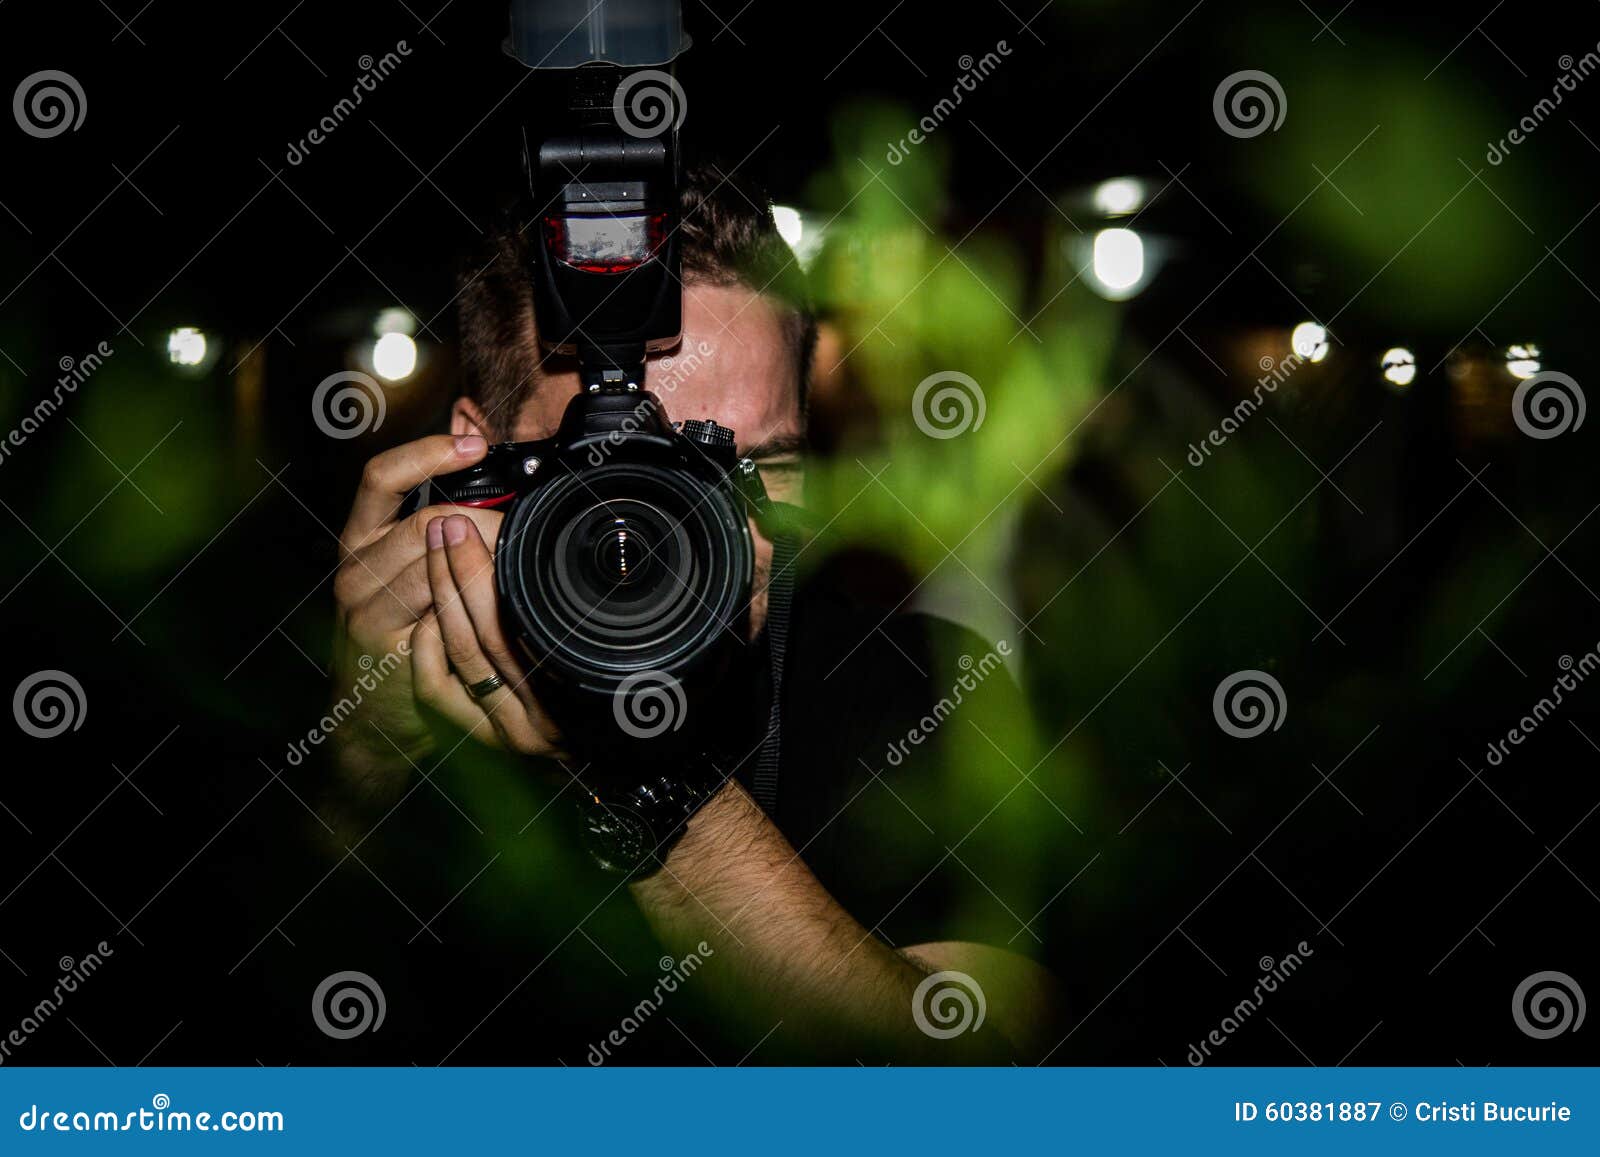 photographer paparazzi